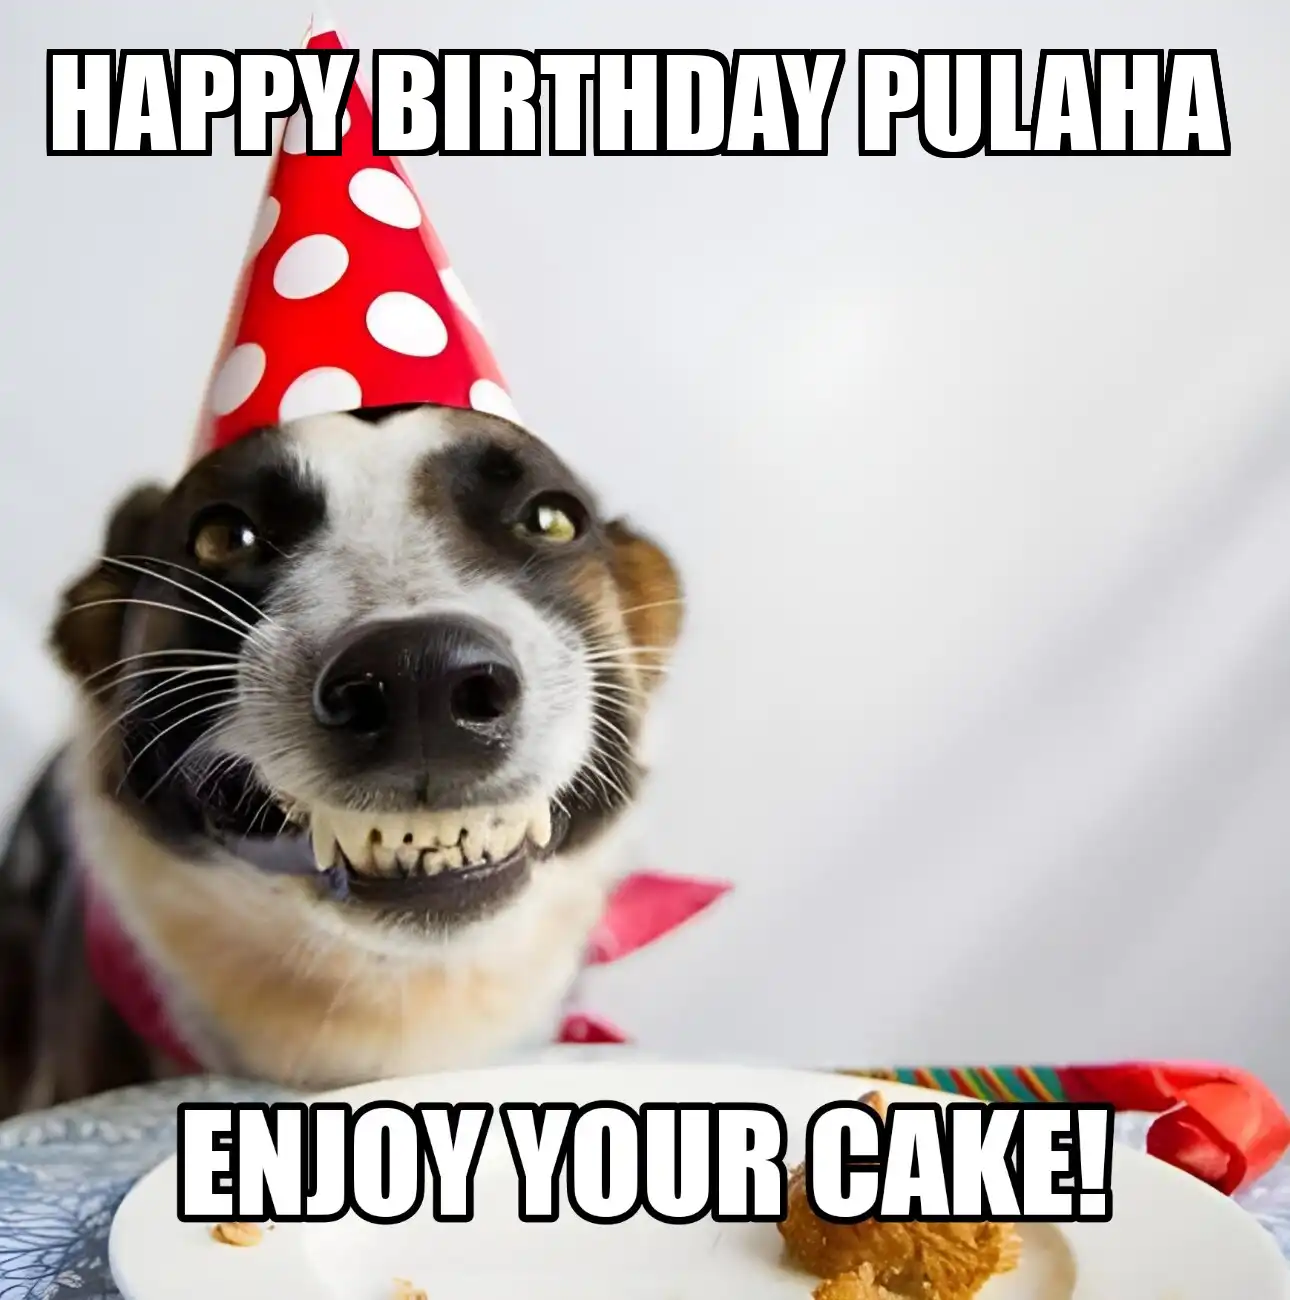 Happy Birthday Pulaha Enjoy Your Cake Dog Meme